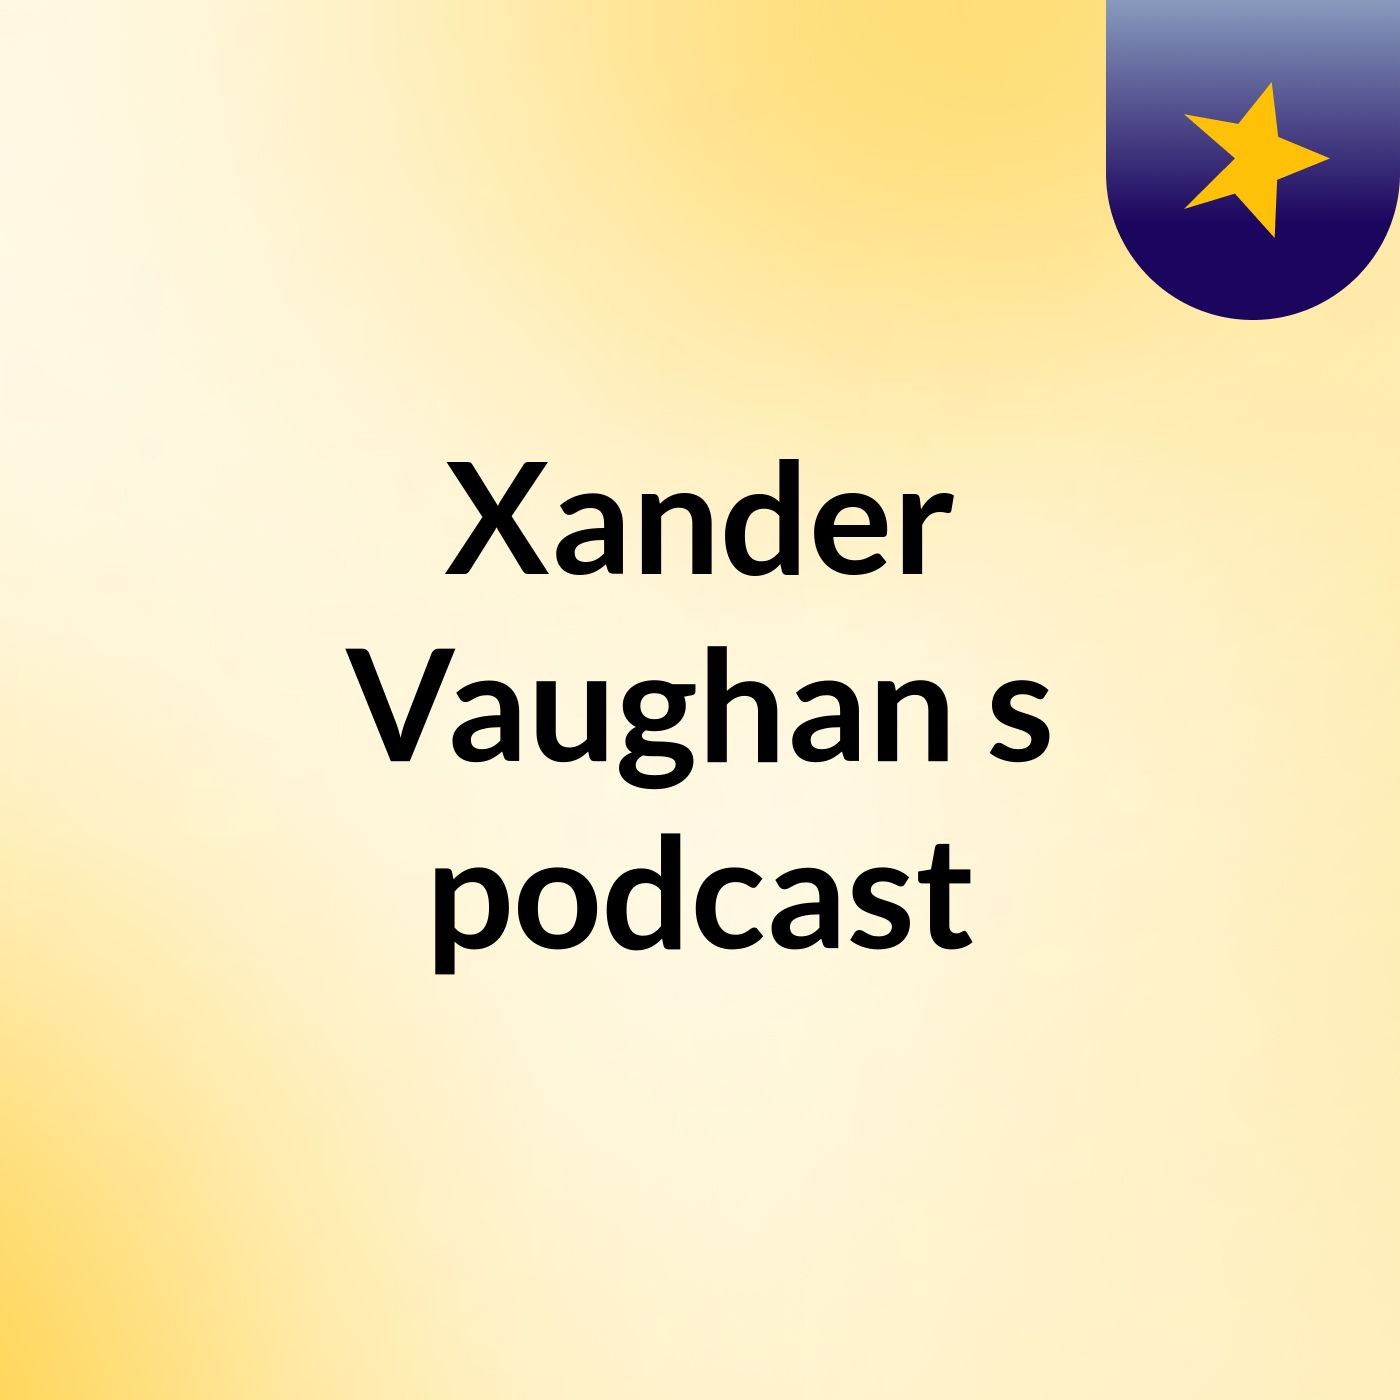 Xander Vaughan's podcast